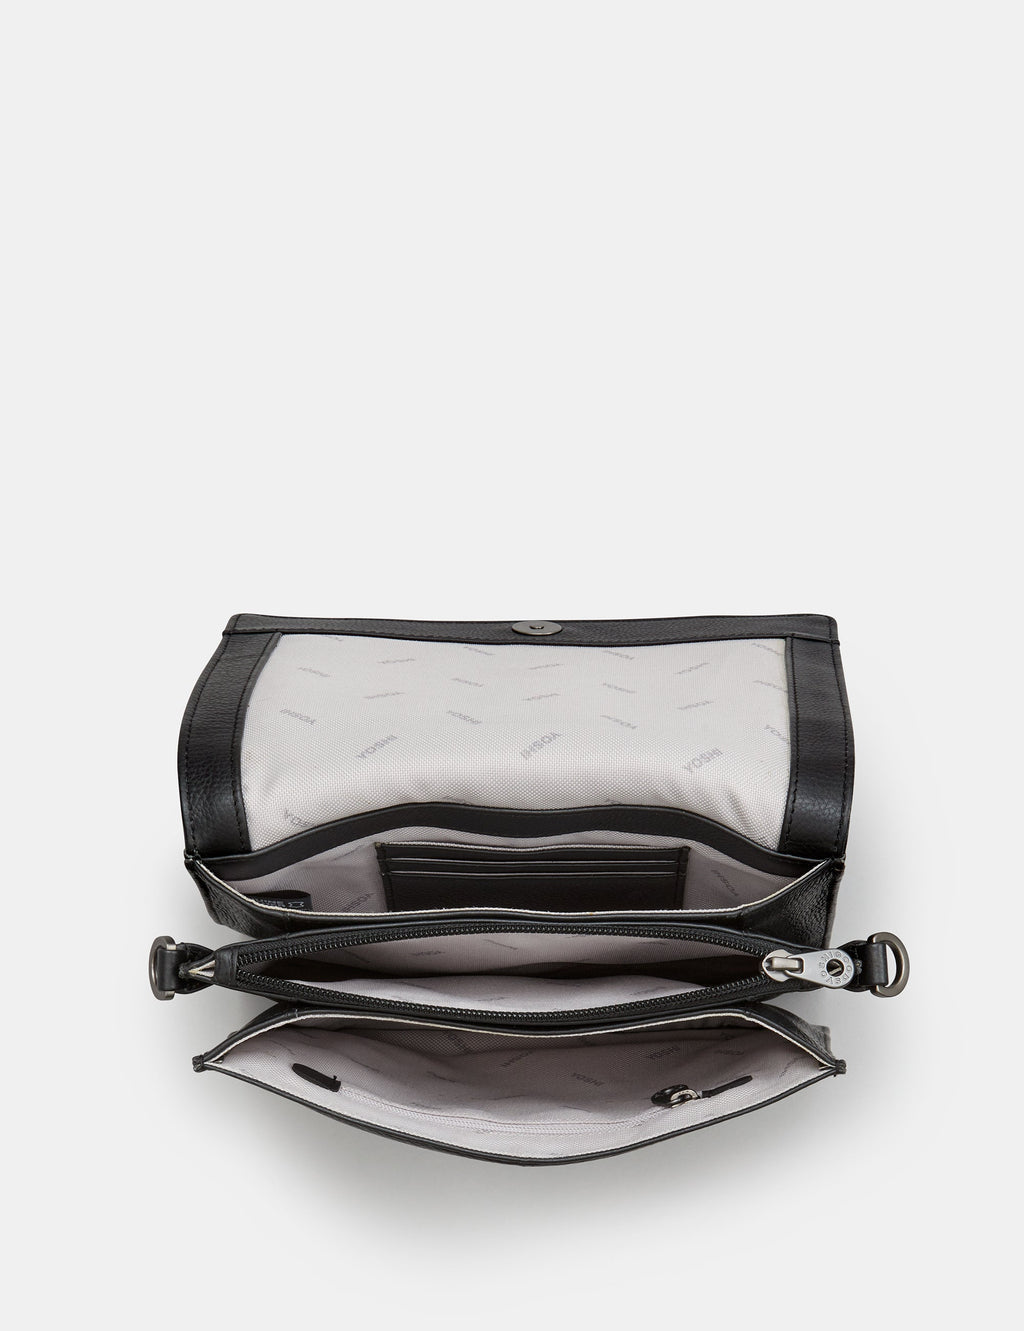 Yoshi - Black Zebra Leather Triple Gusset Flap Bag